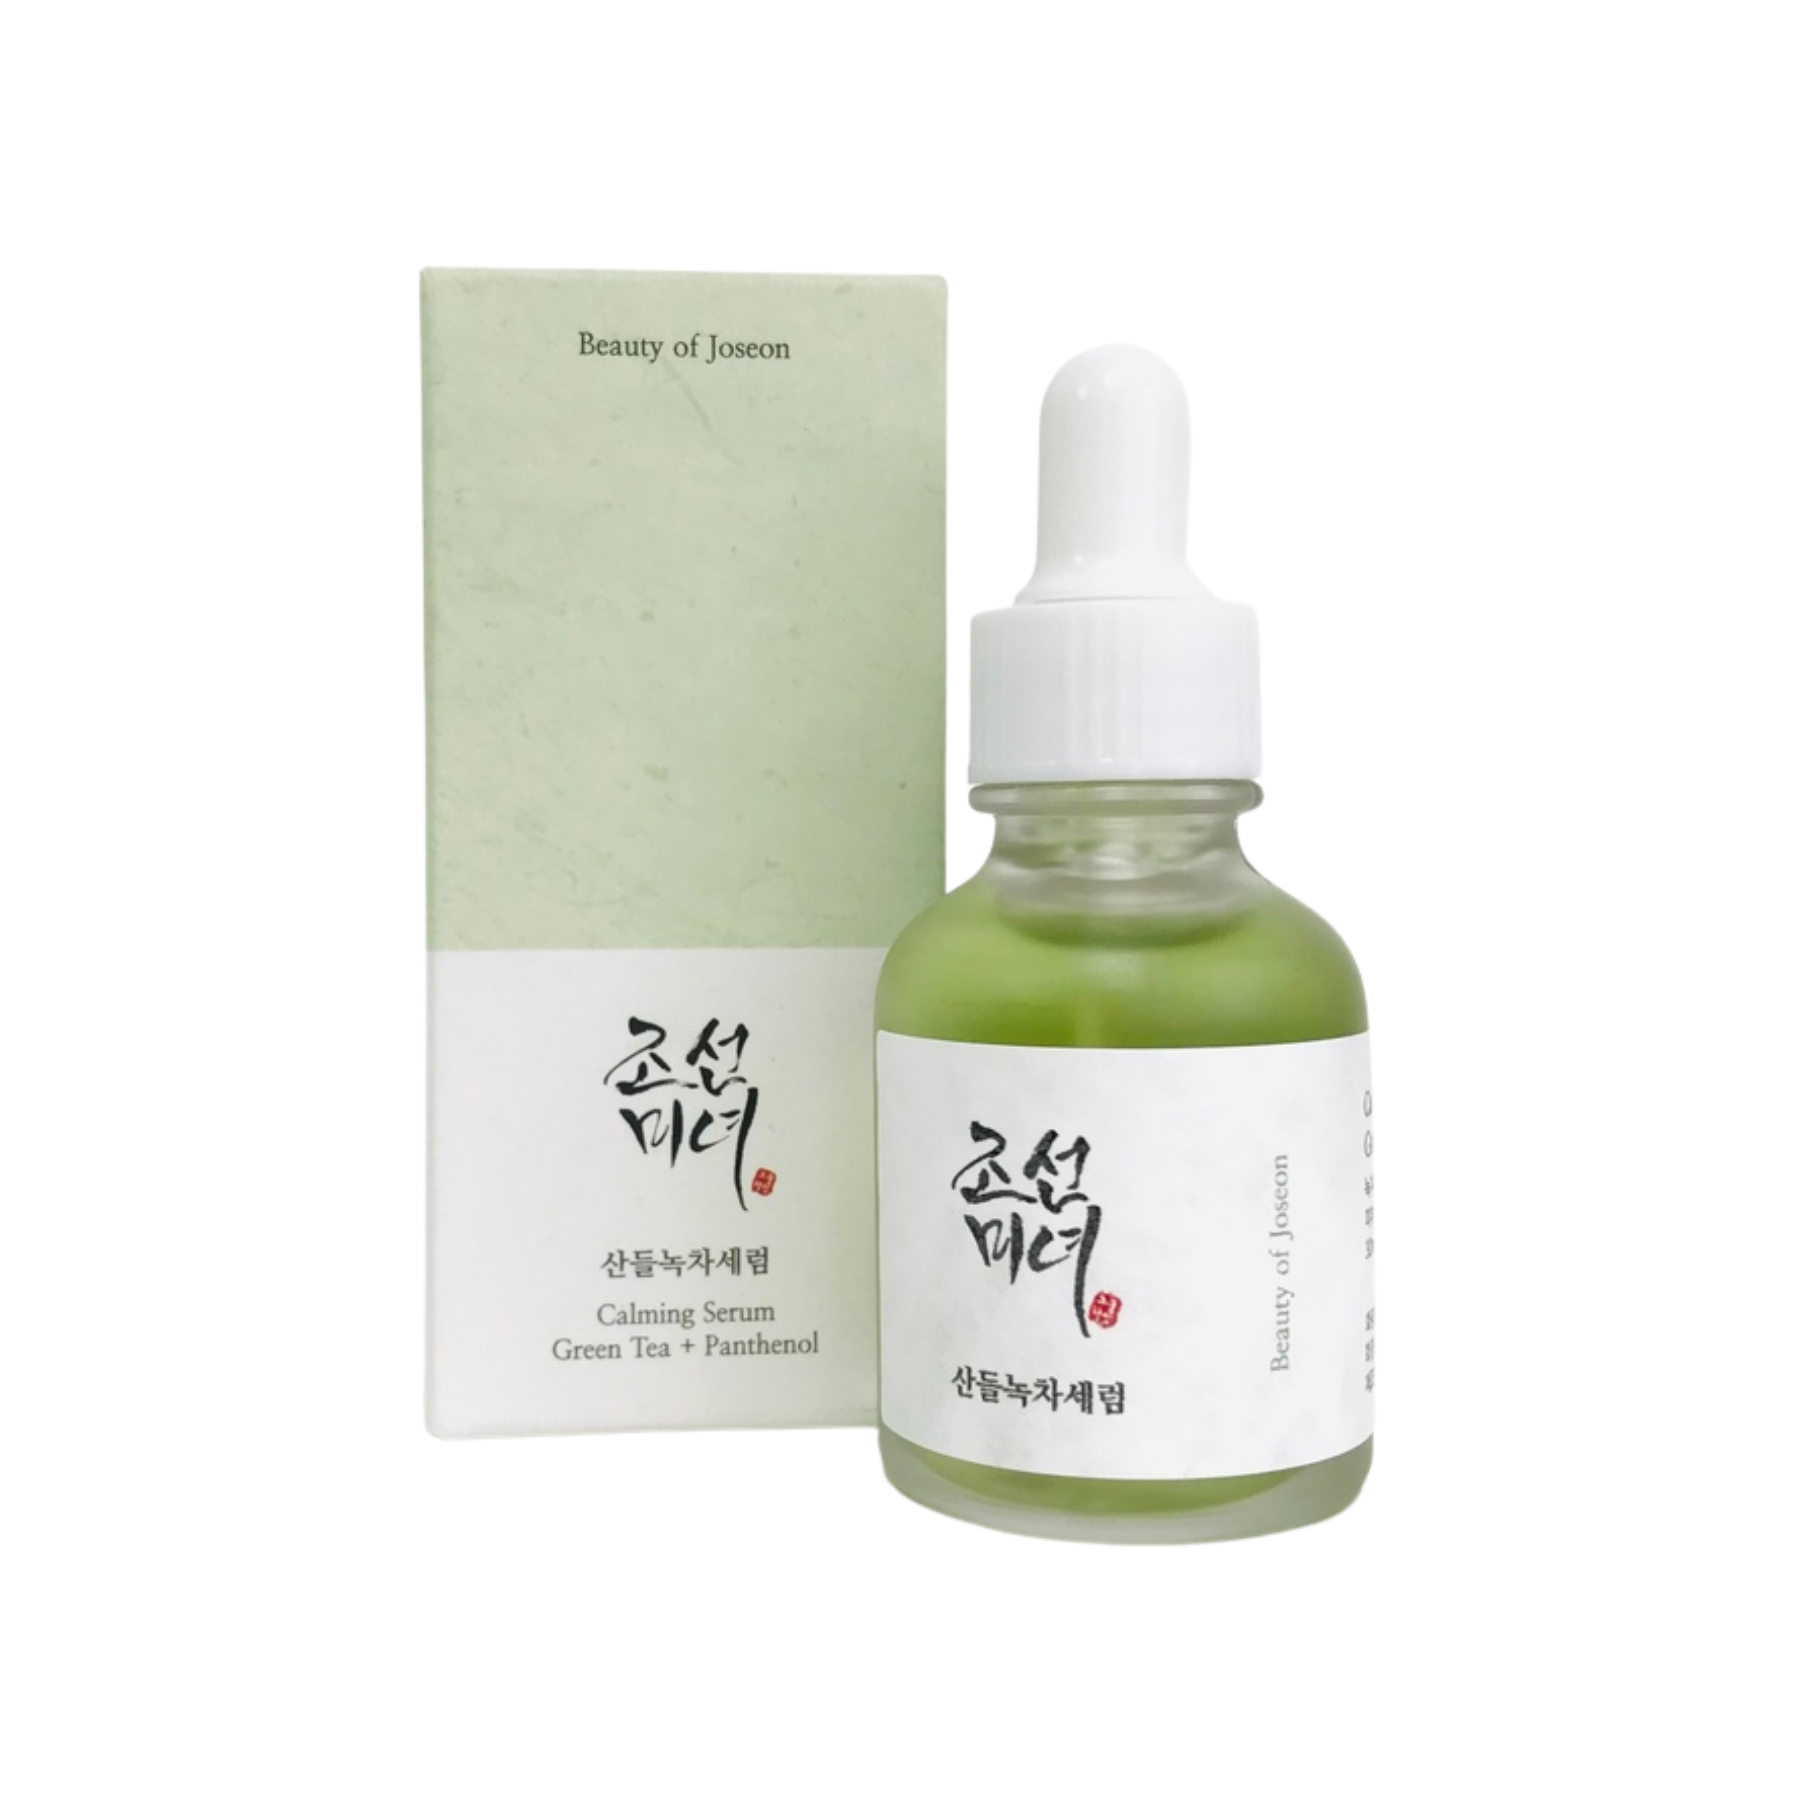 Beauty of Joseon Calming Serum: Green Tea + Panthenol 10ml / 30ml